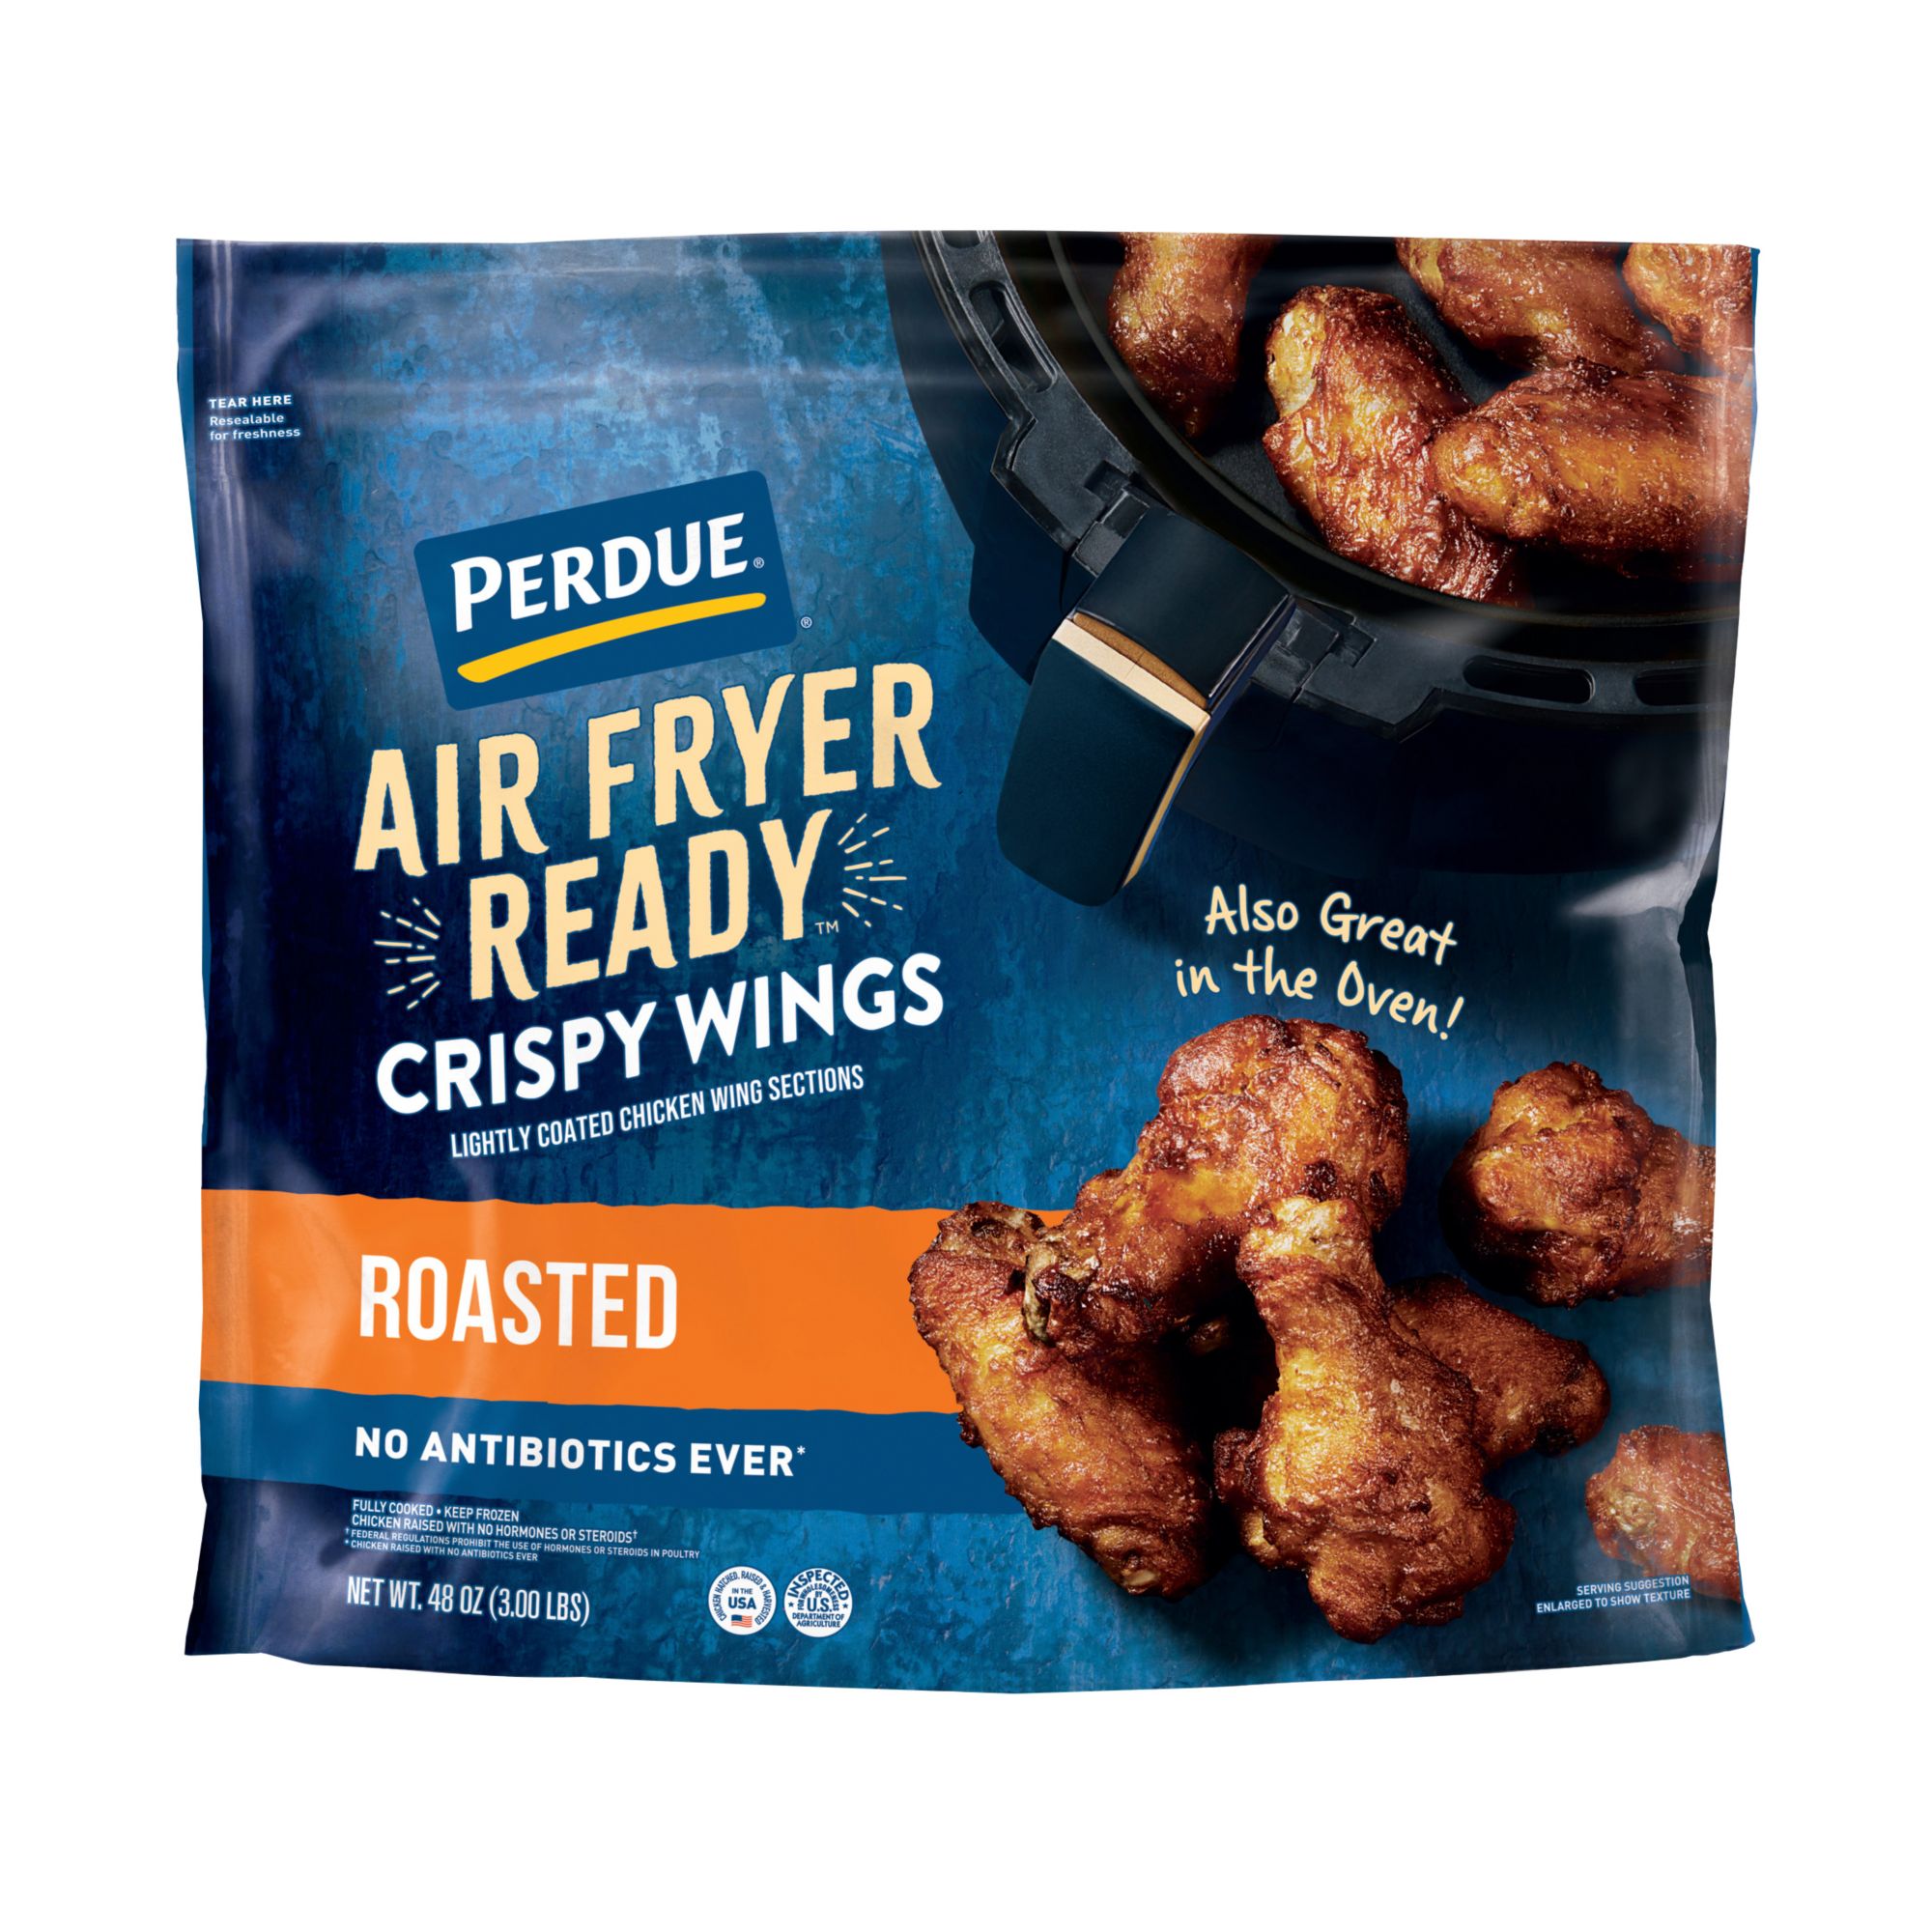 Perdue Air Fryer Ready Roasted Crispy Chicken Wings, 3 lbs.